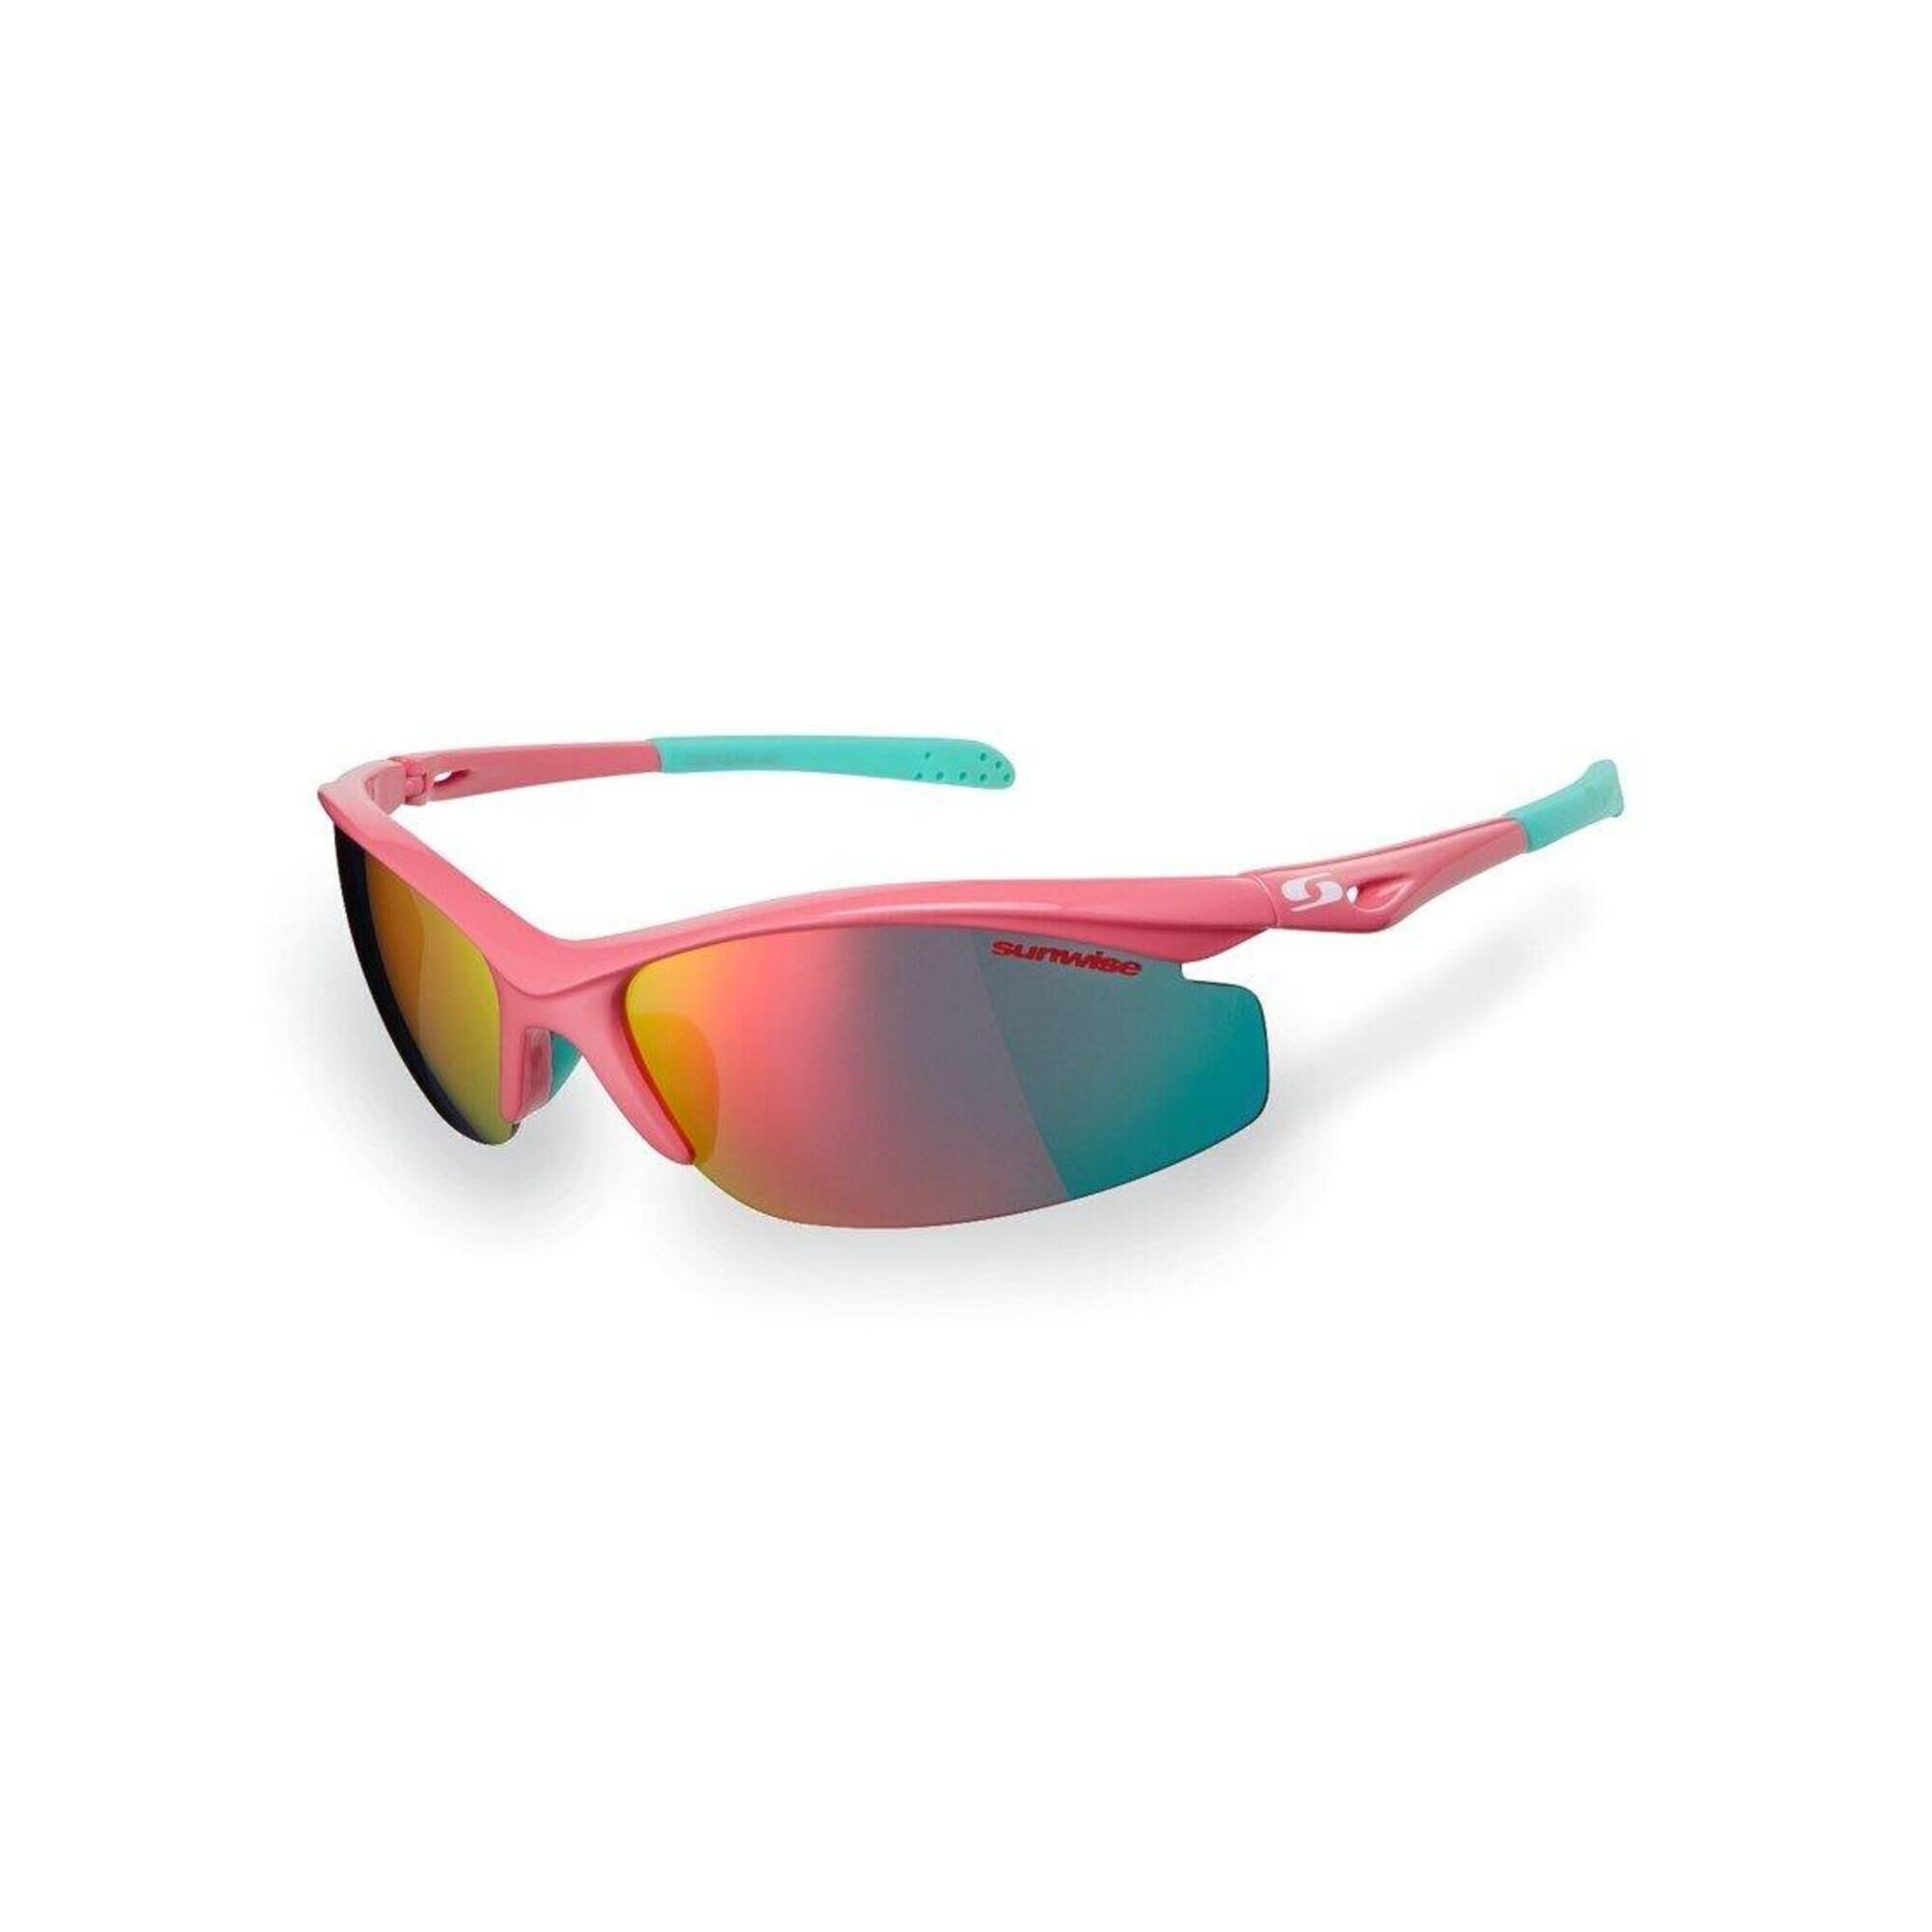 SUNWISE Peak MK1 Sports Sunglasses - Category 3